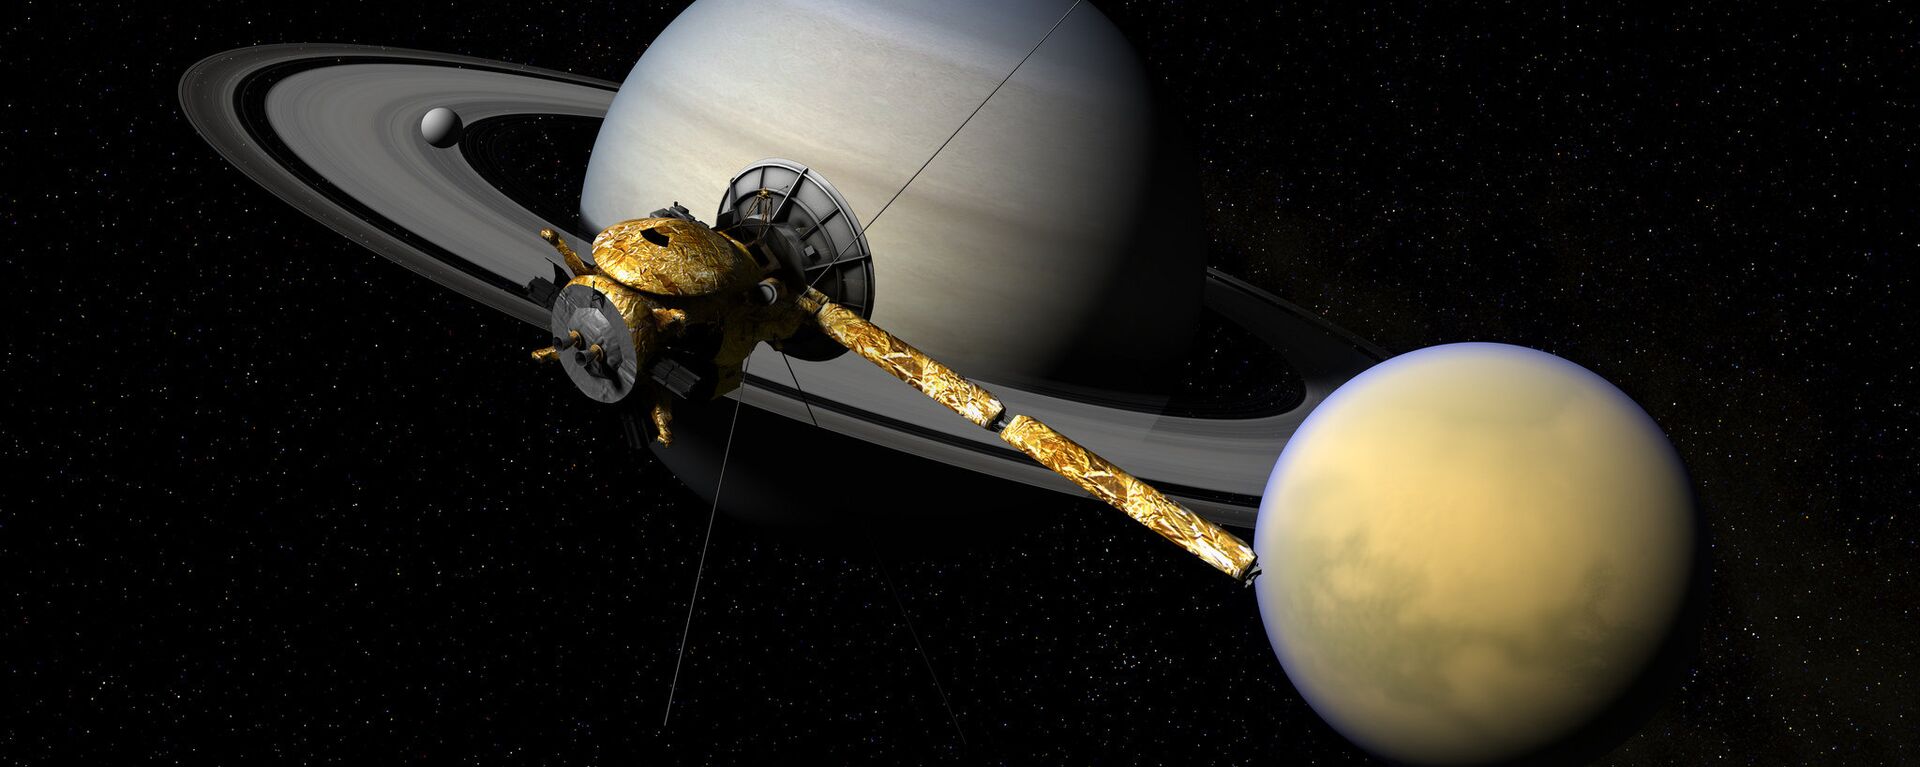 Cassini, Titan, & Saturn - Sputnik International, 1920, 11.06.2020